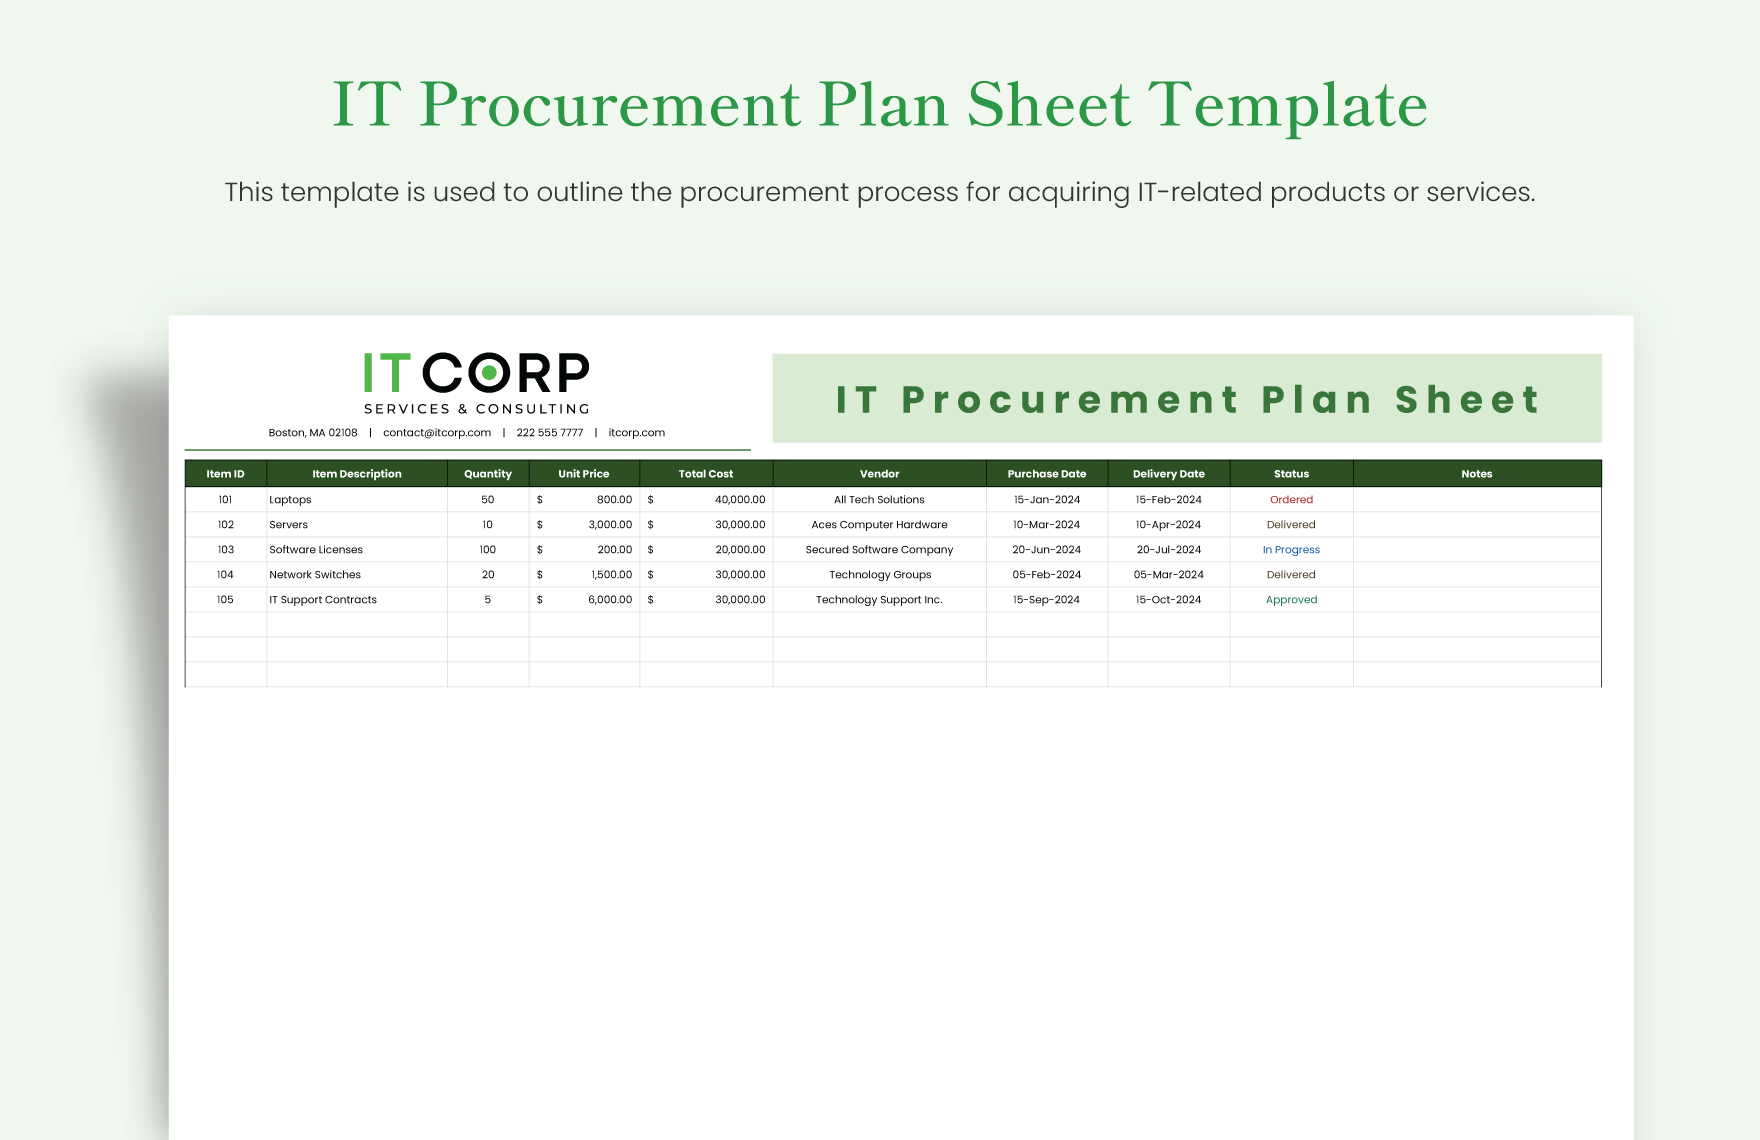 IT Procurement Plan Sheet Template